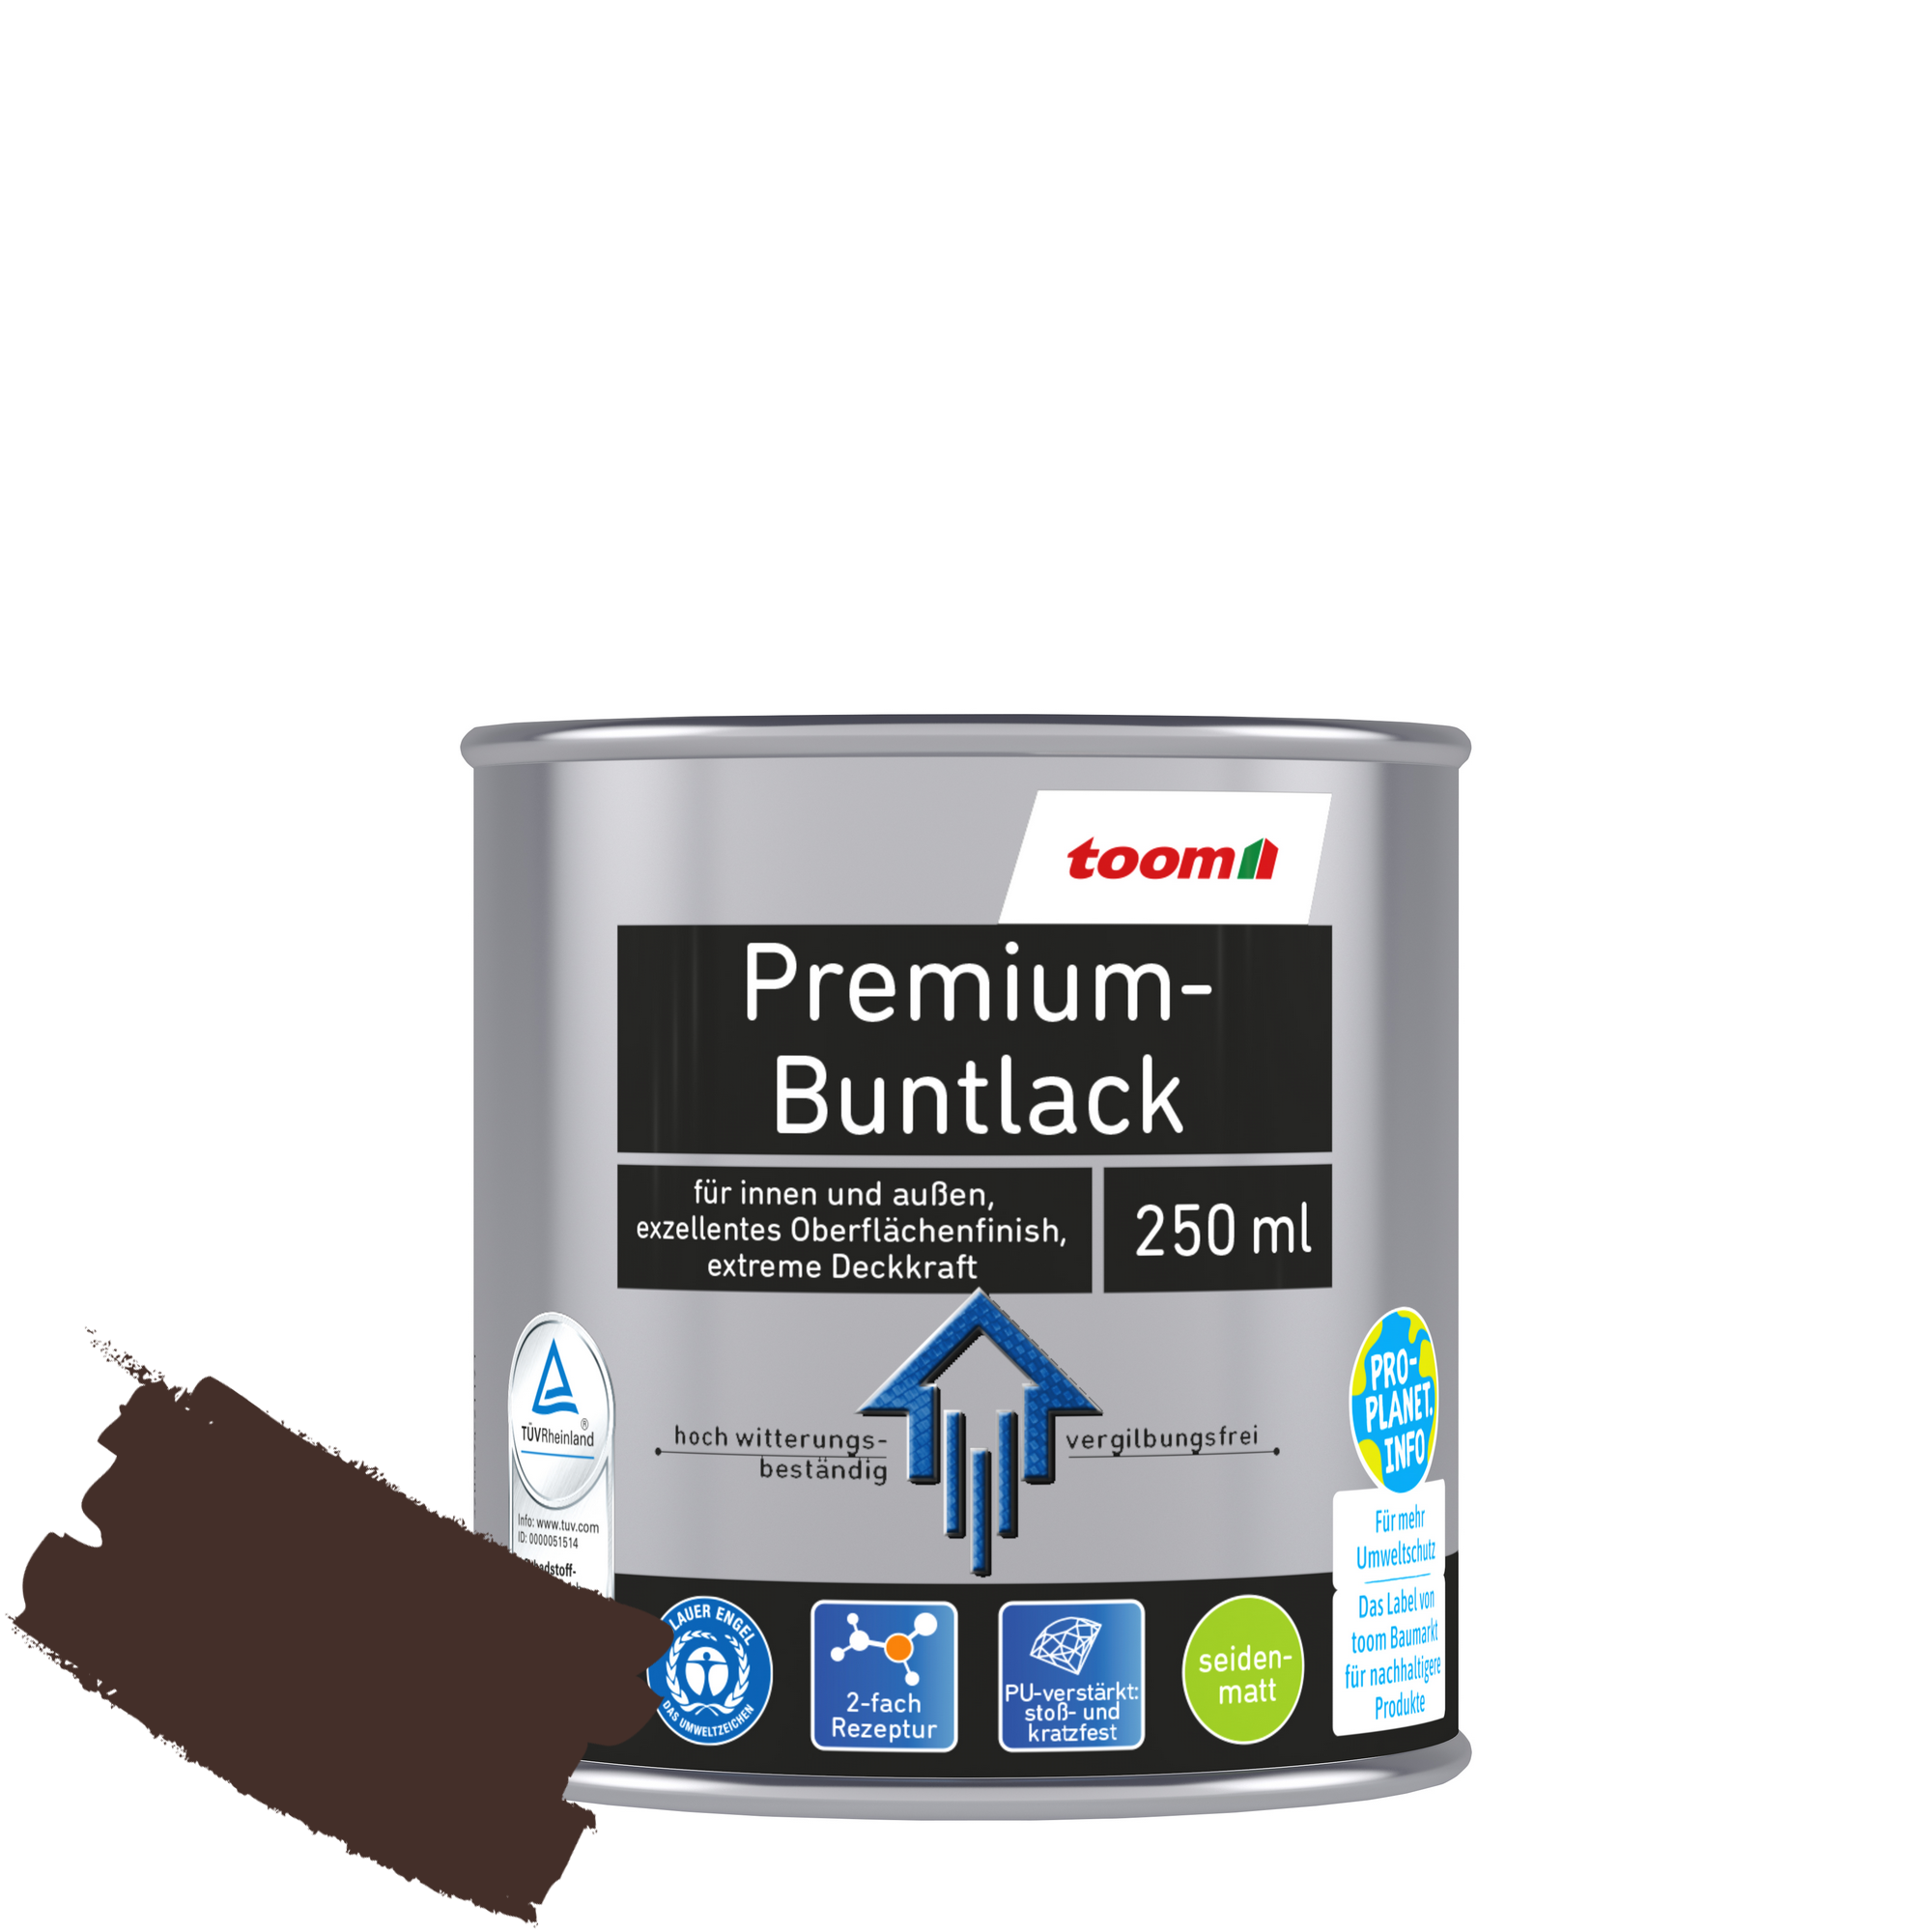 Premium-Buntlack schokobraun seidenmatt 250 ml + product picture